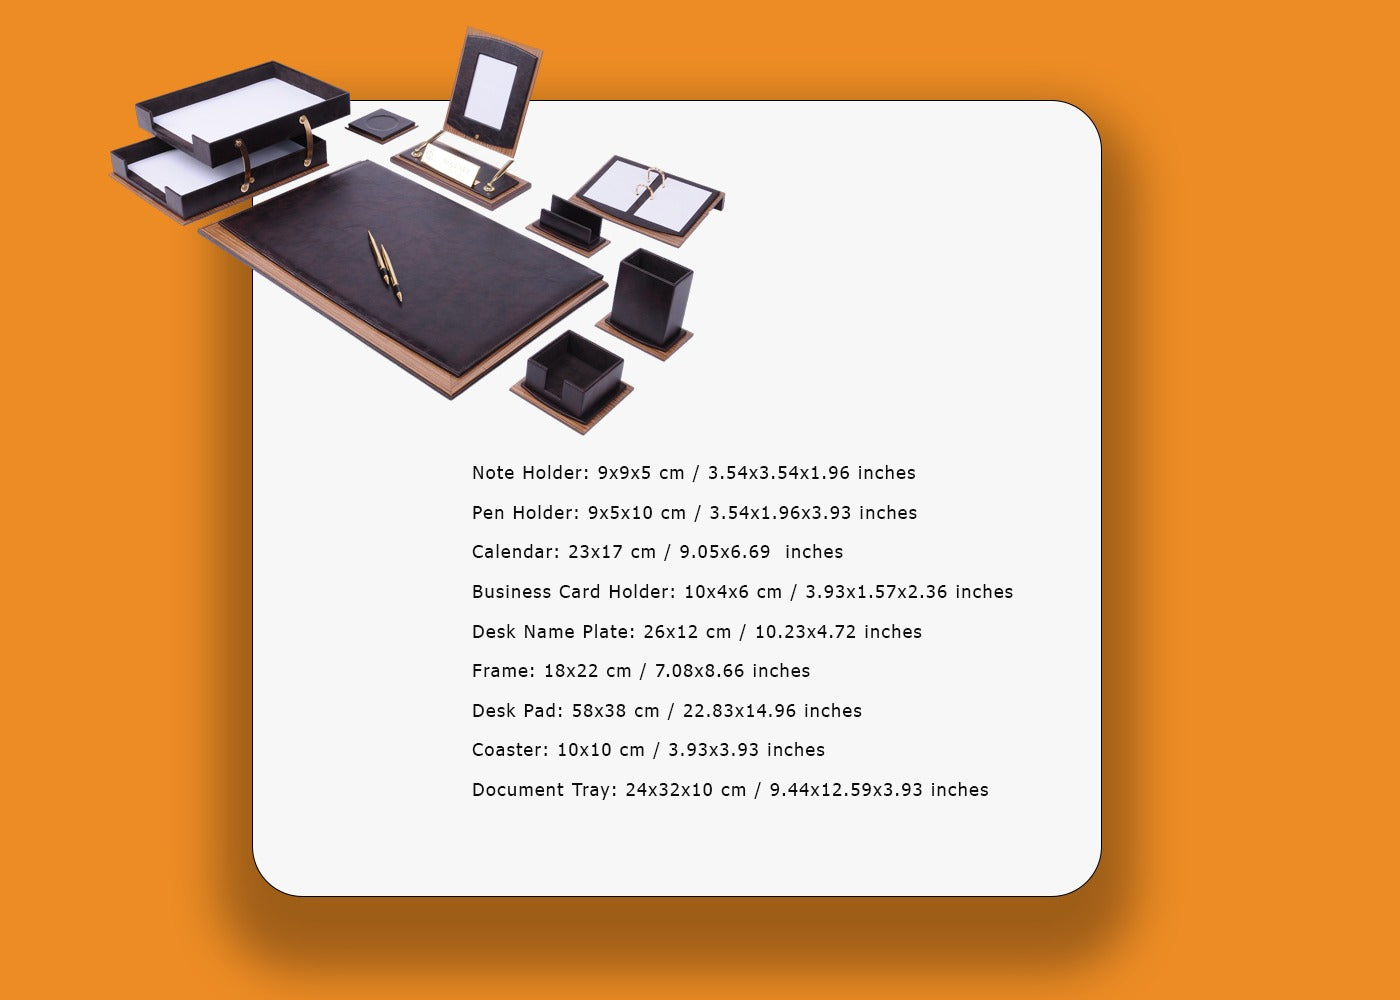 MOOG Luxury Desk Set 9 Pieces-Desk Office Accessories-Storage-Desk Organizers And Accessories-Office Desk Accessories-Desk Organizer Set-Desk Pads & Blotters - 9 PCS